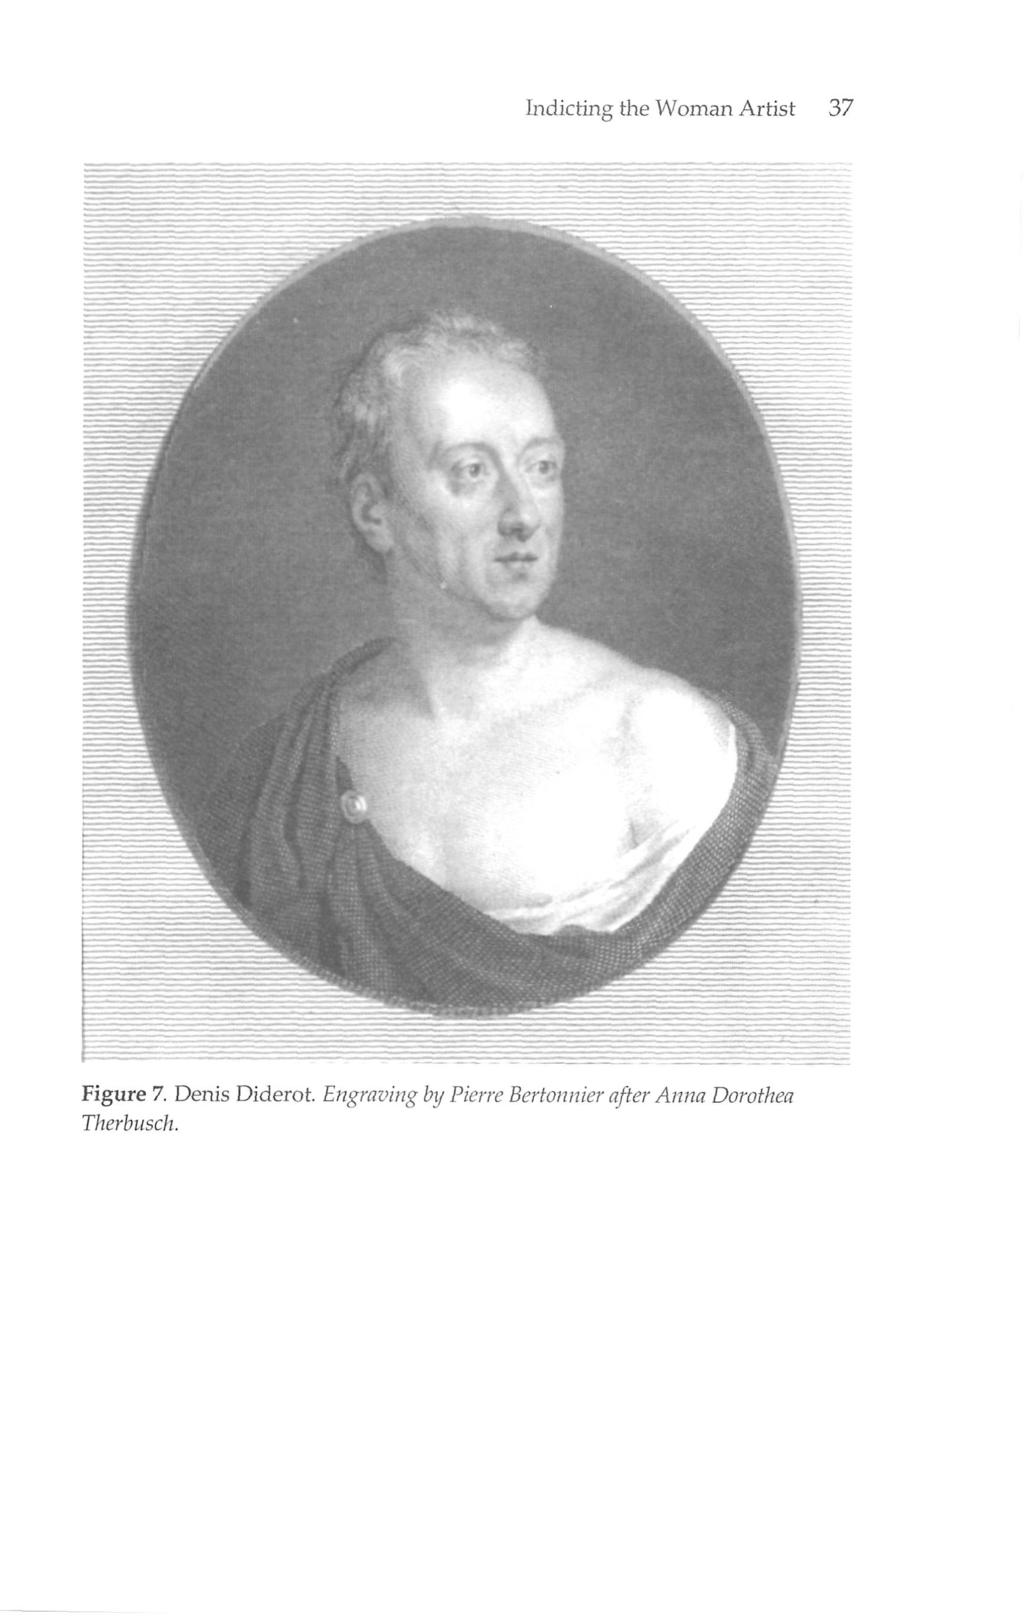 Figure 7. Denis Diderot.